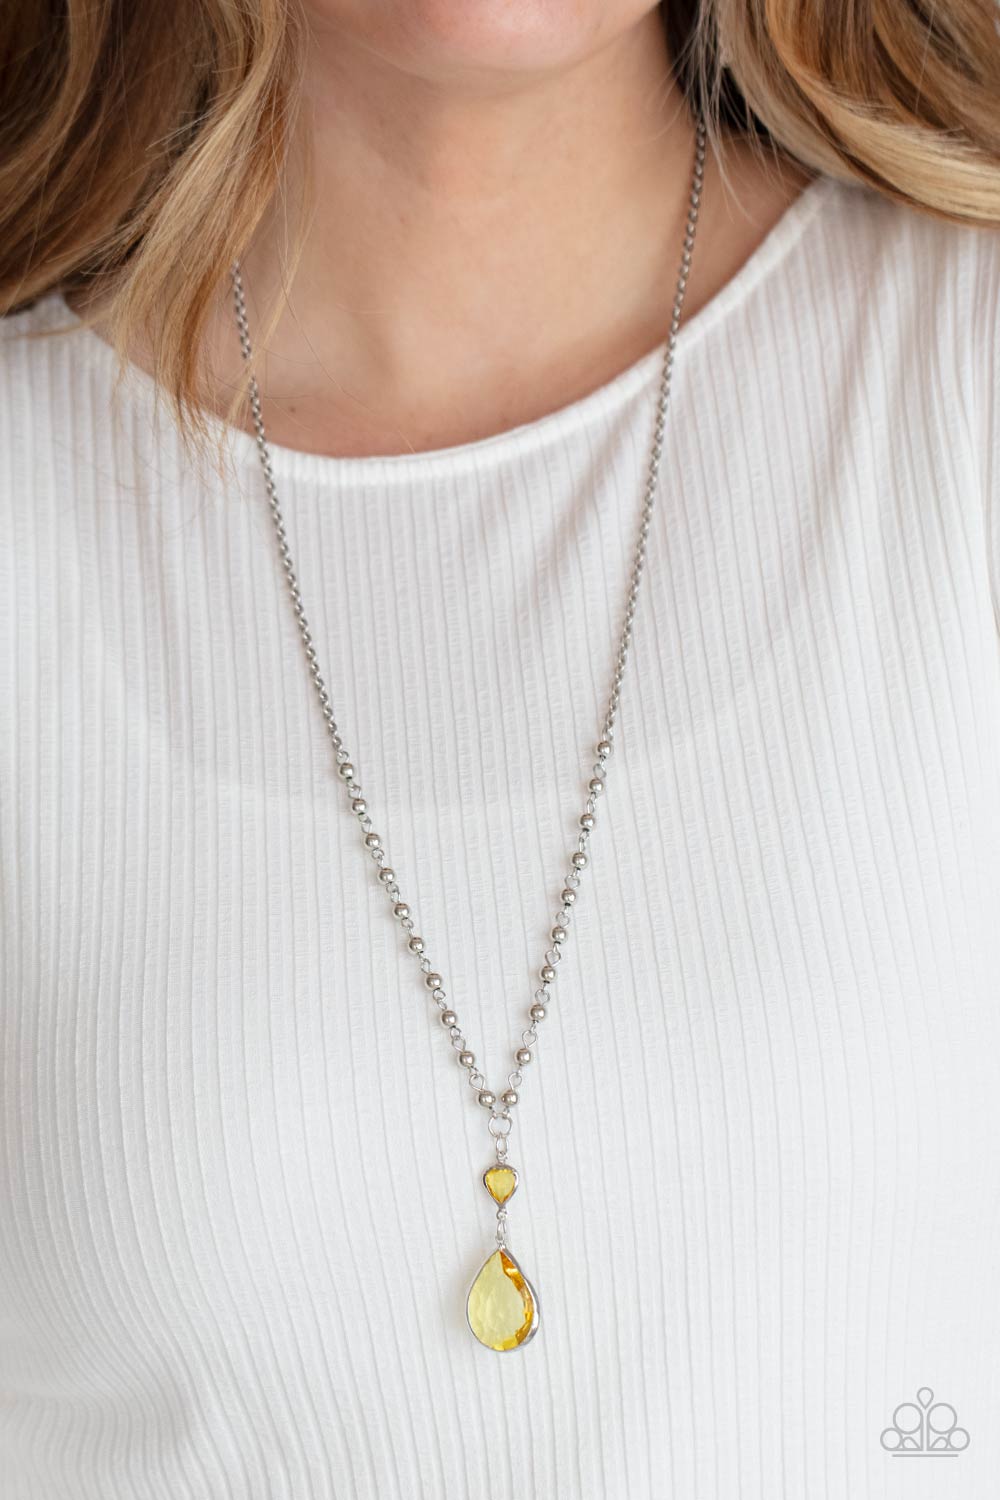 Titanic Splendor Yellow Gem Necklace - Paparazzi Accessories- model - CarasShop.com - $5 Jewelry by Cara Jewels